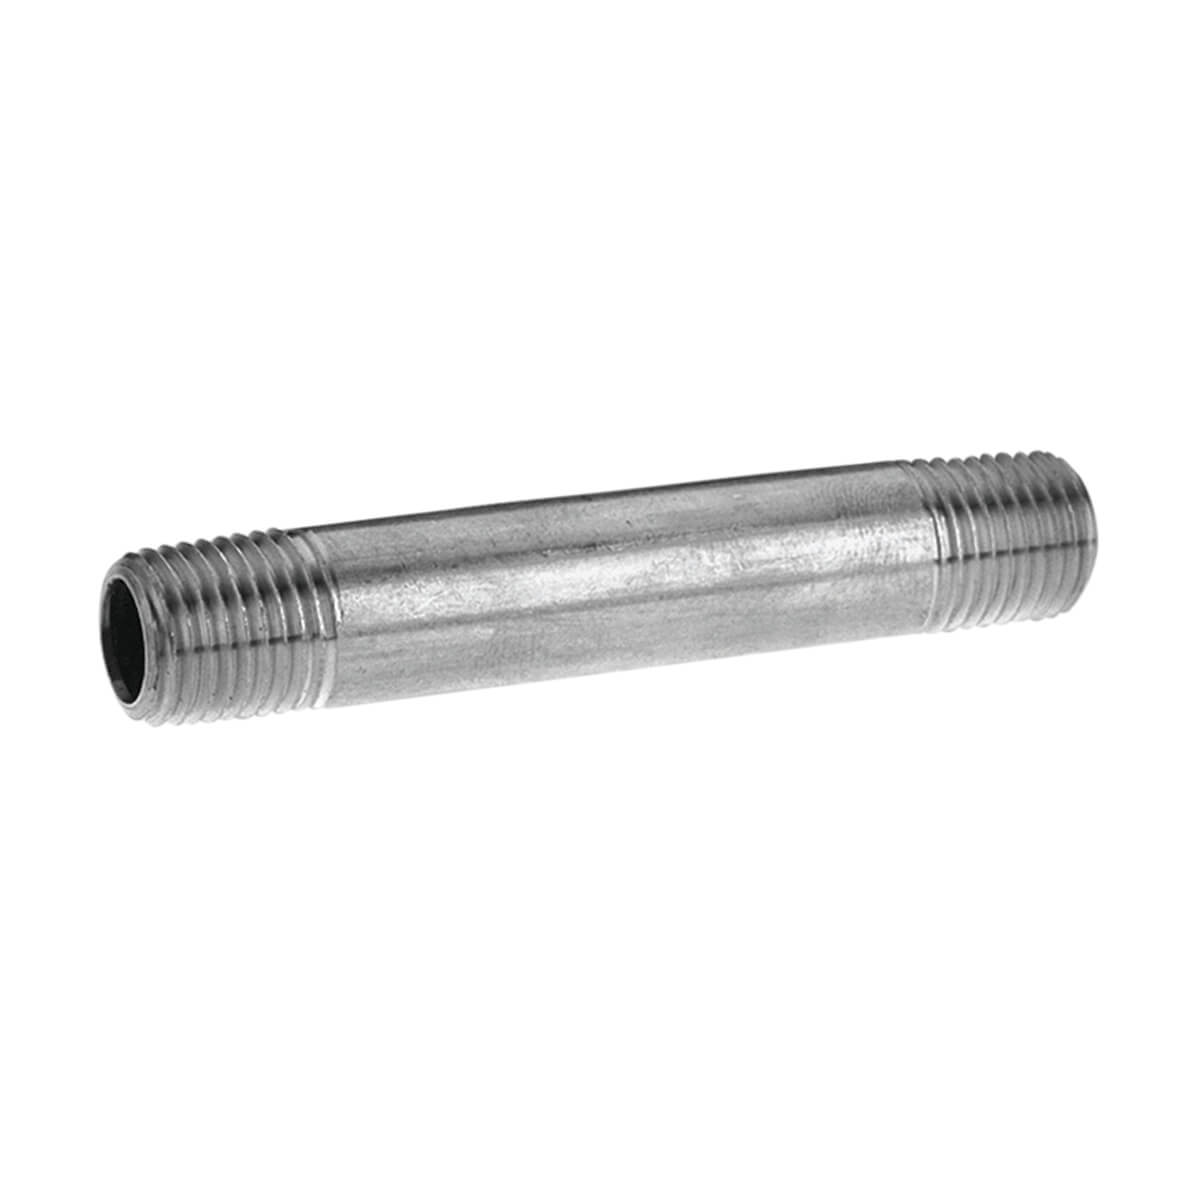 Pipe Nipple Galvanized Steel - 1/4-in x 4-in